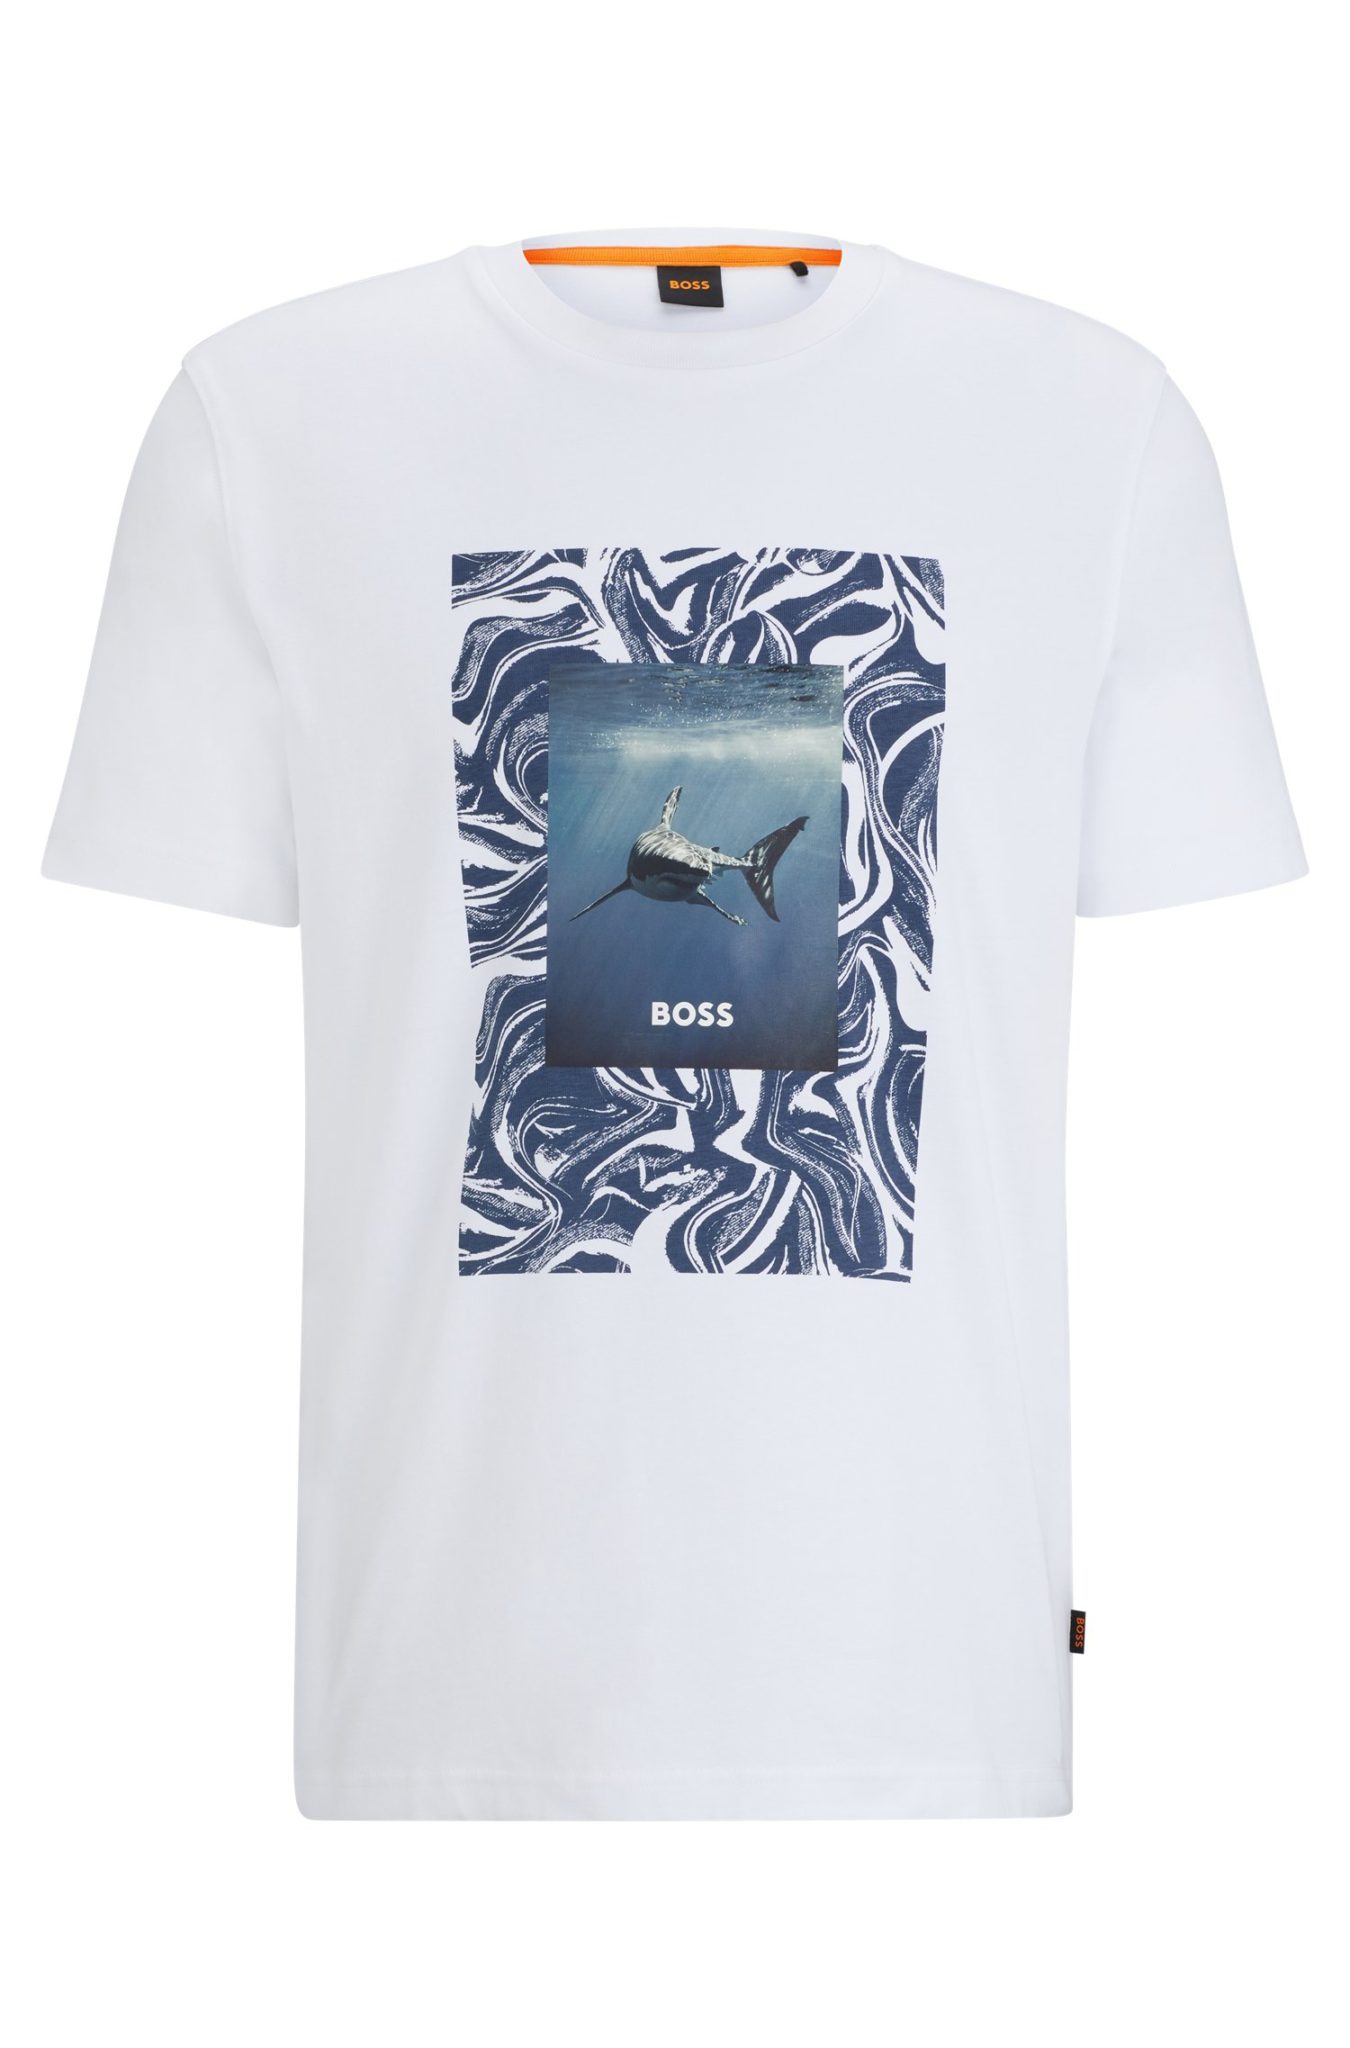 Hugo Boss T-shirt Regular Fit en jersey de coton avec motif artistique saisonnier